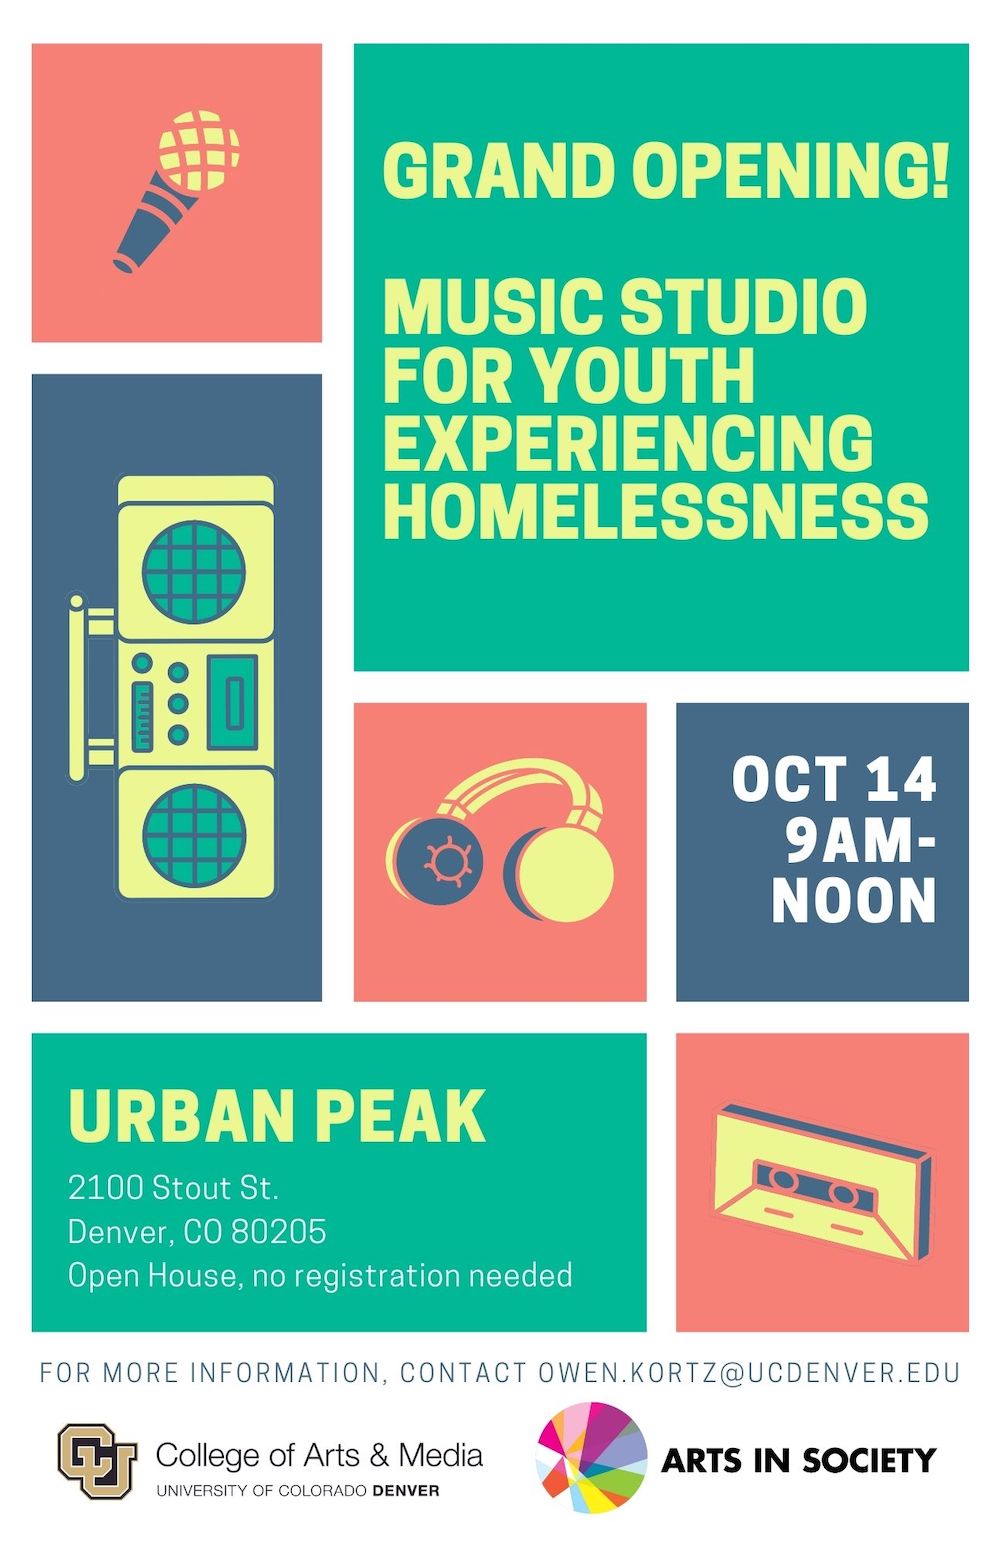 Urban Peak music studio opening